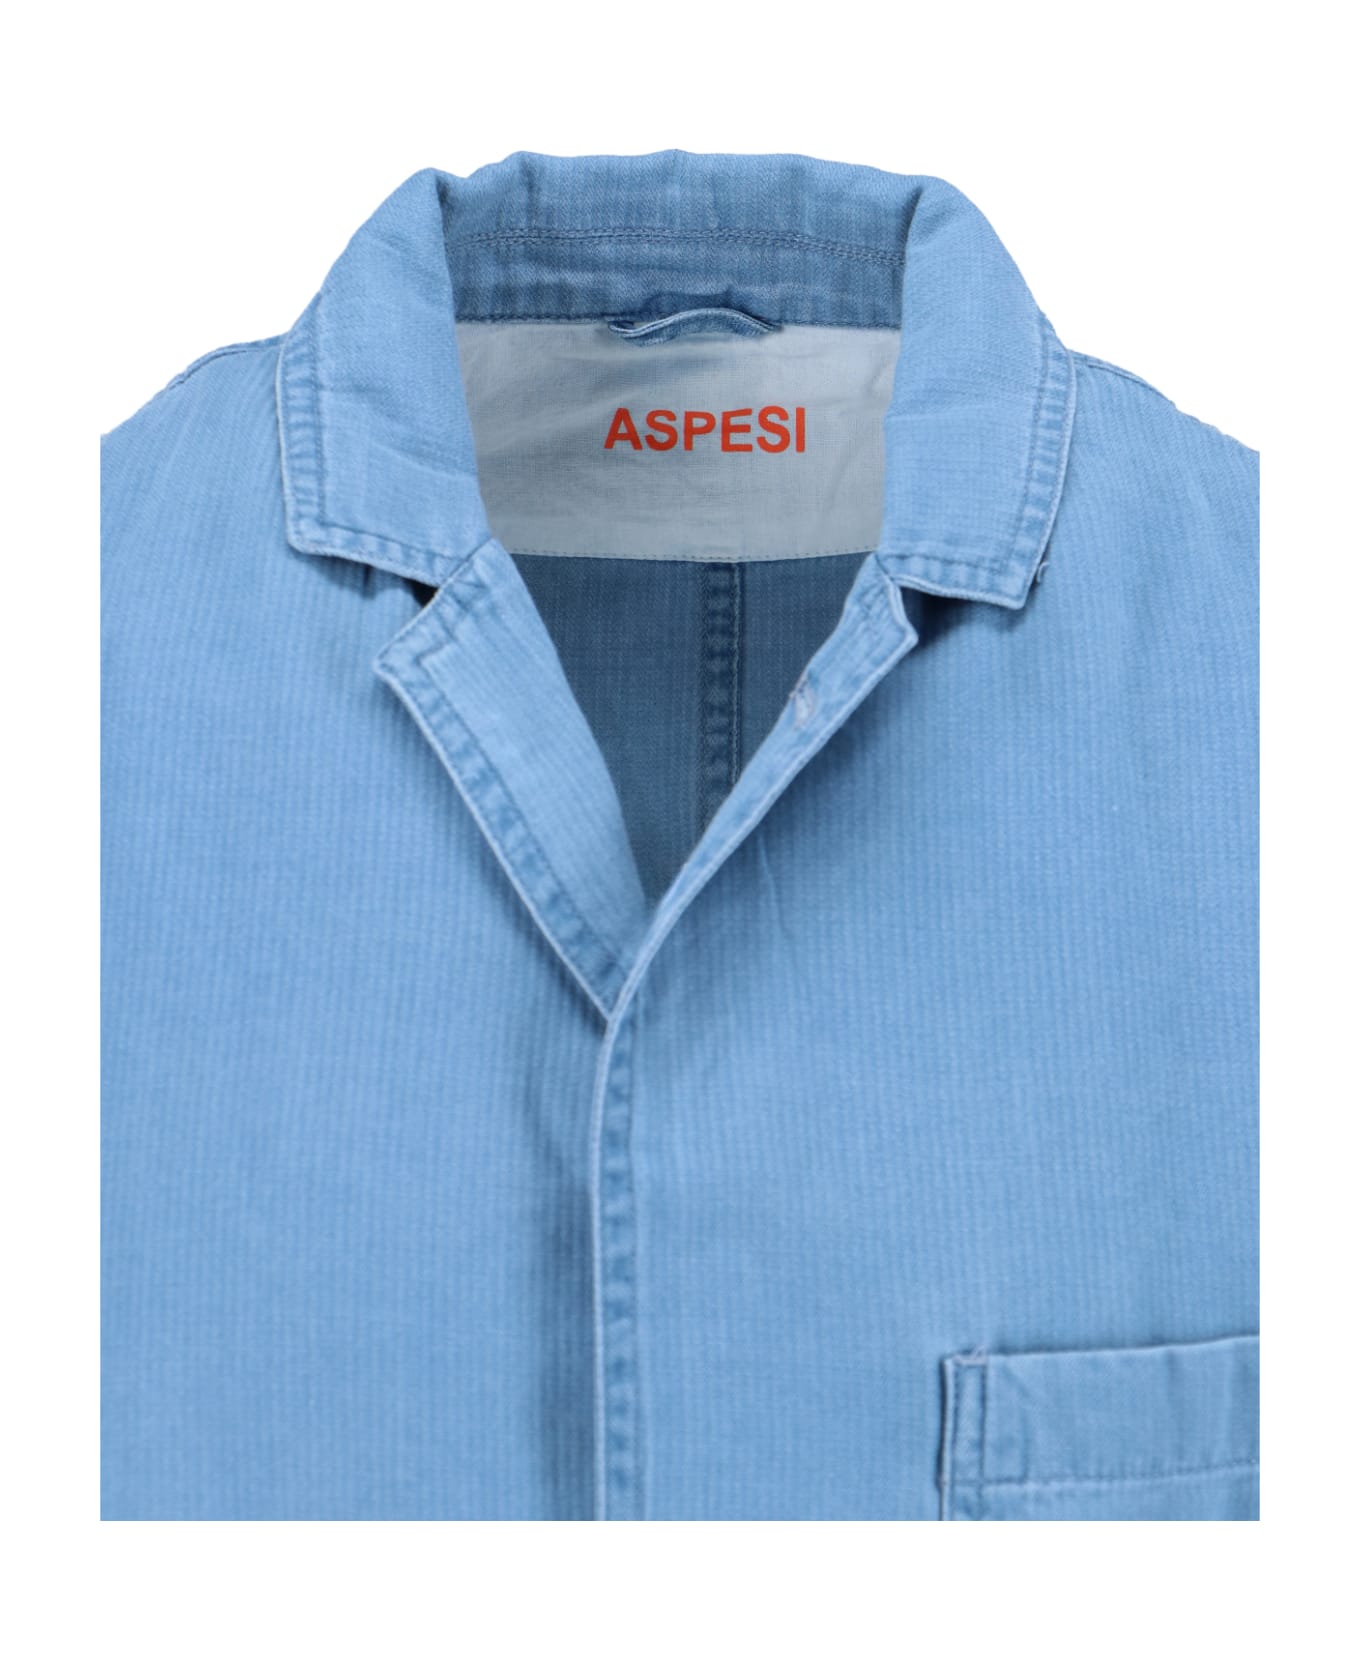 Aspesi Cotton Blazer - Light Blue